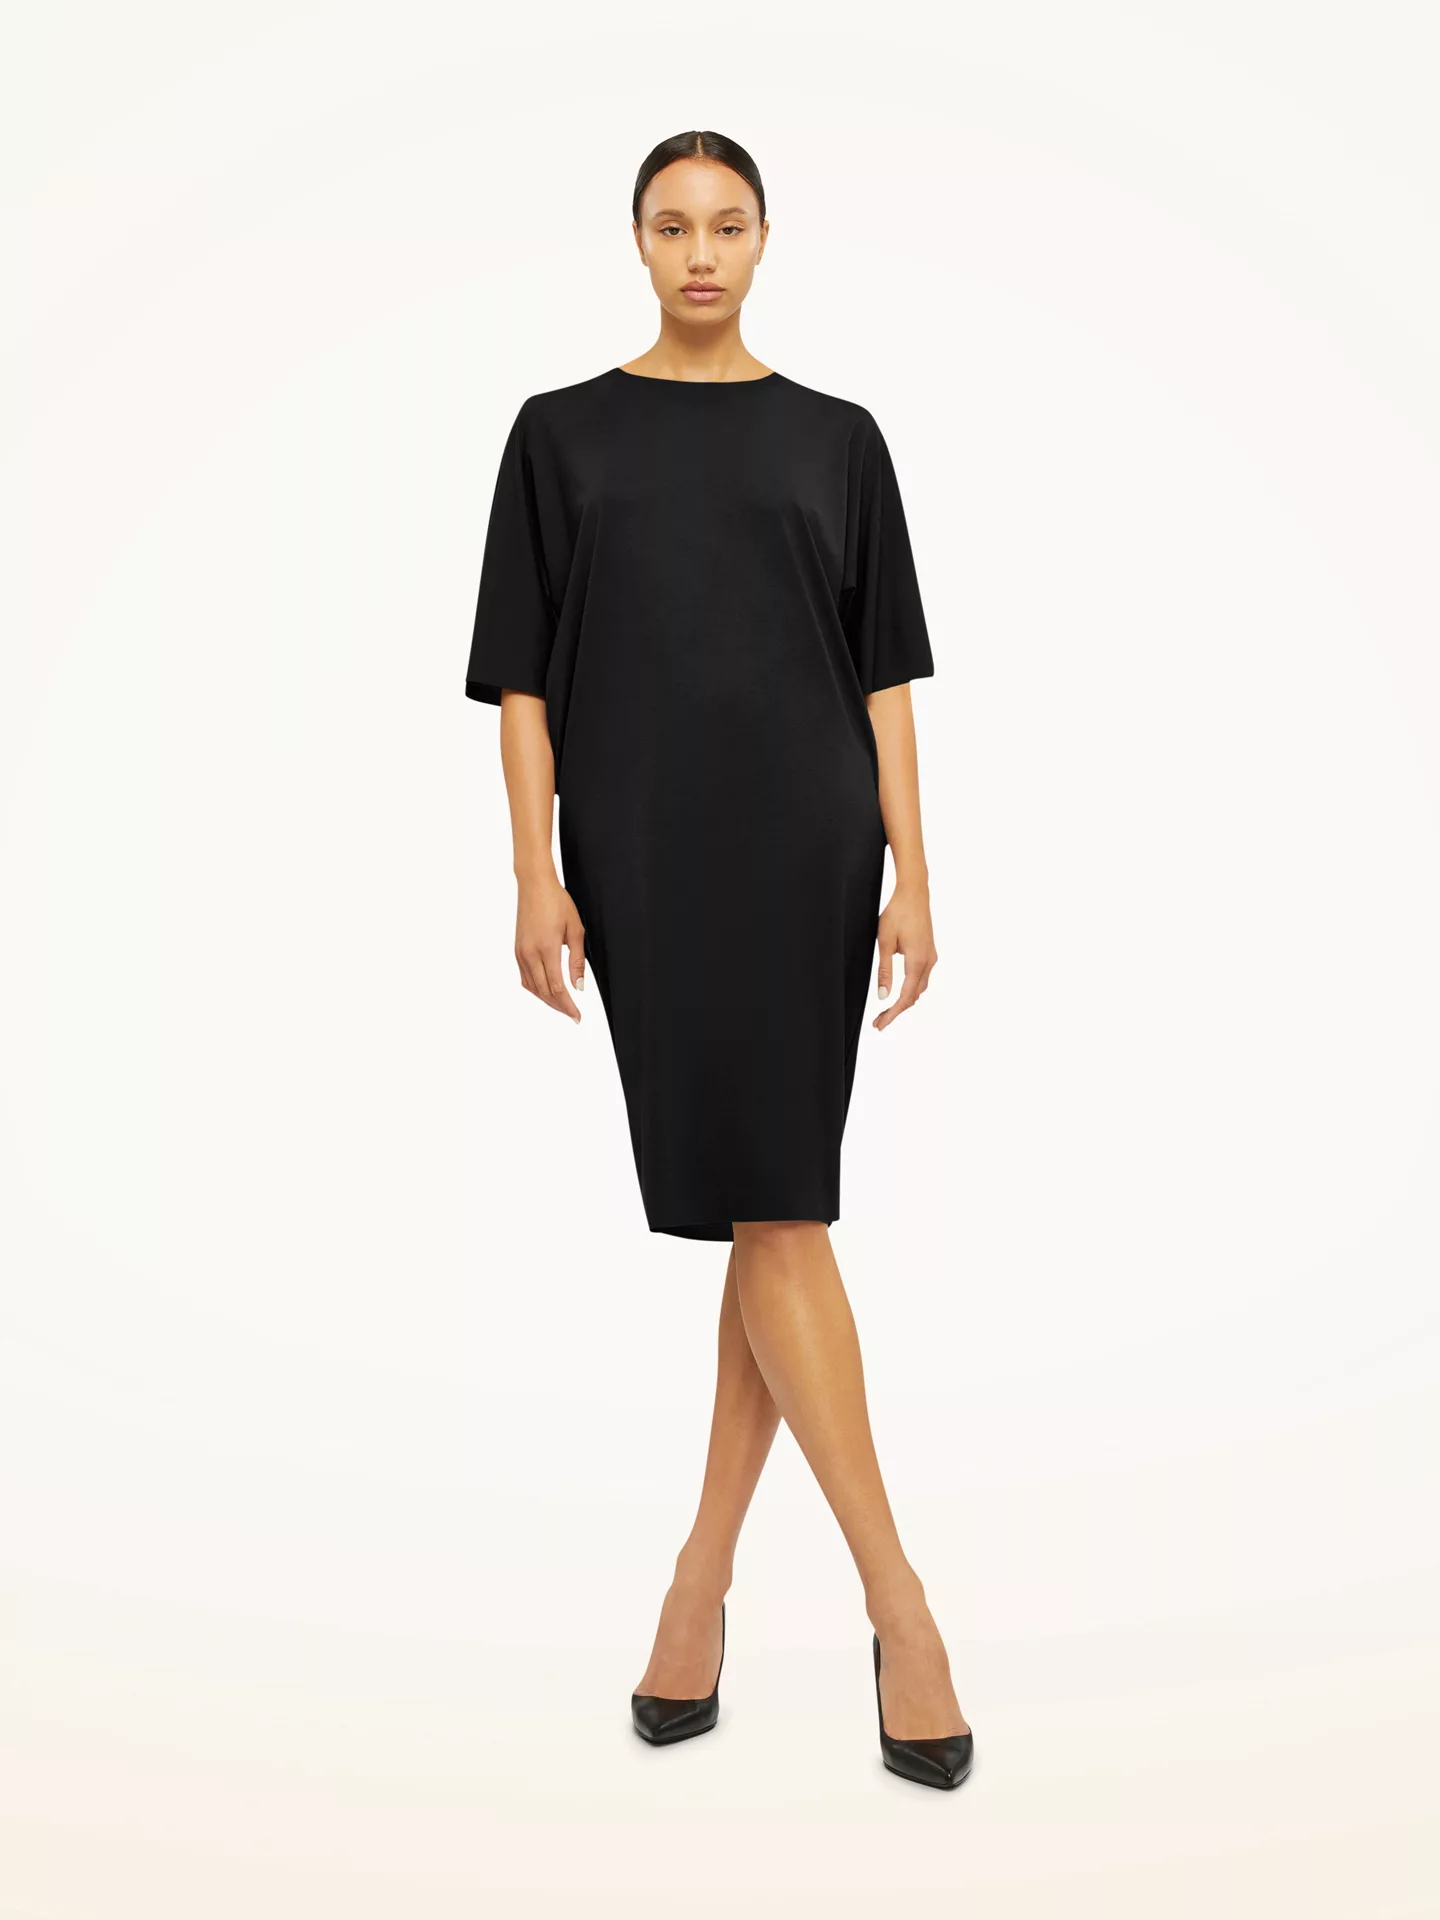 Wolford - Pure Cut Dress, Frau, black, Größe: L günstig online kaufen